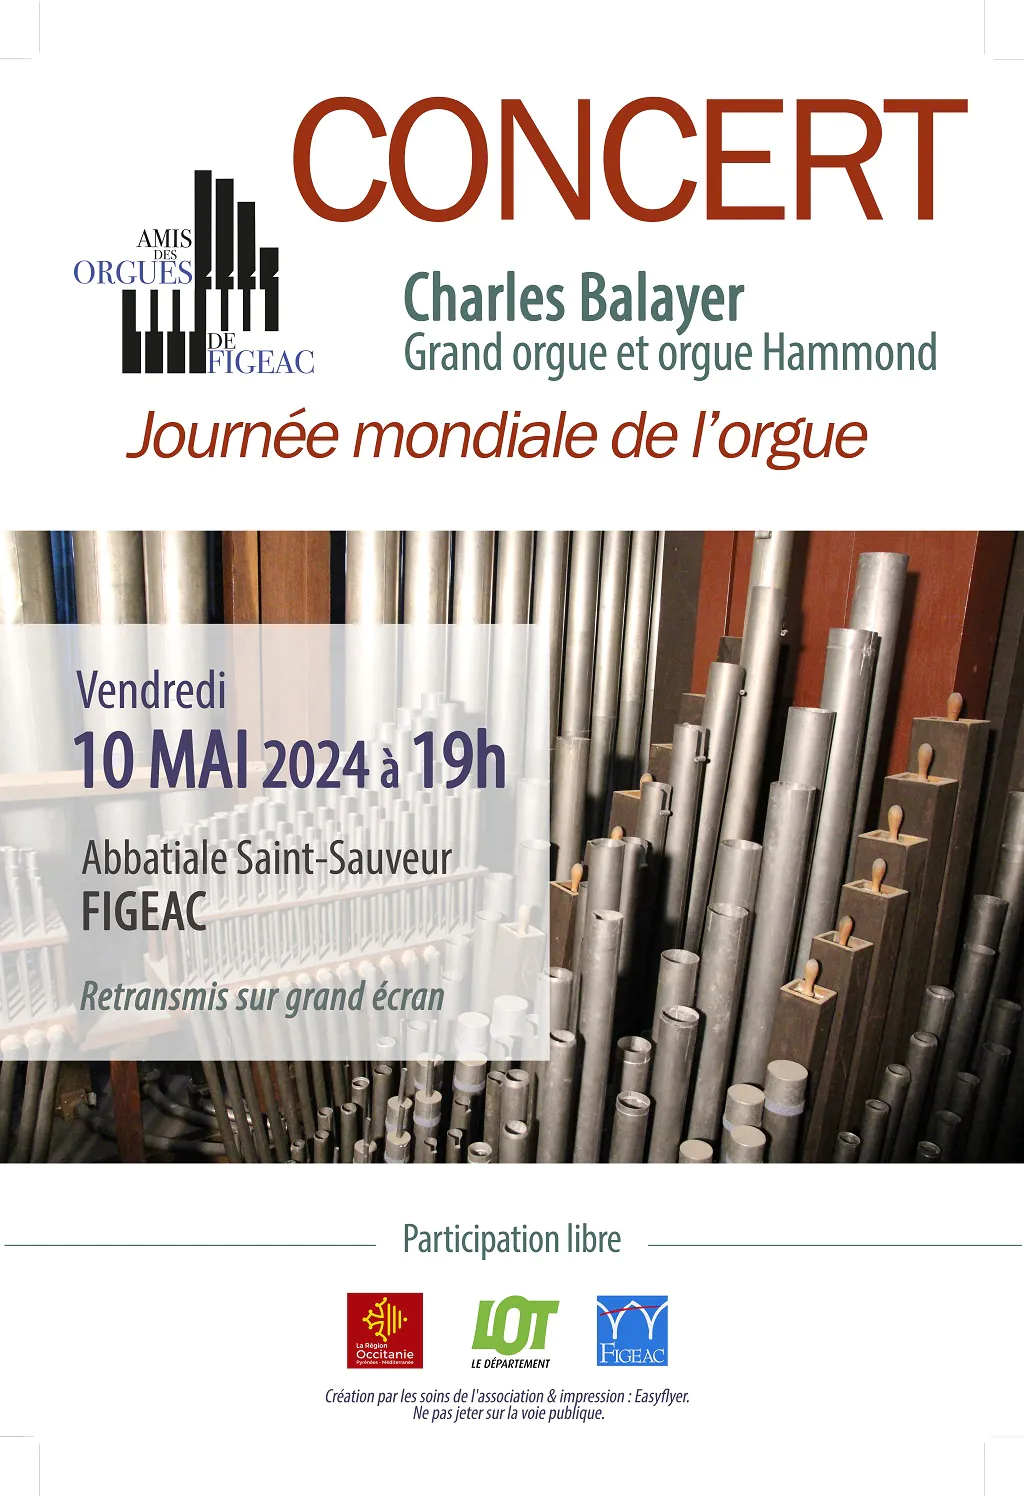 Concert "Charles Balayer Grand orgue et orgue Hammond"